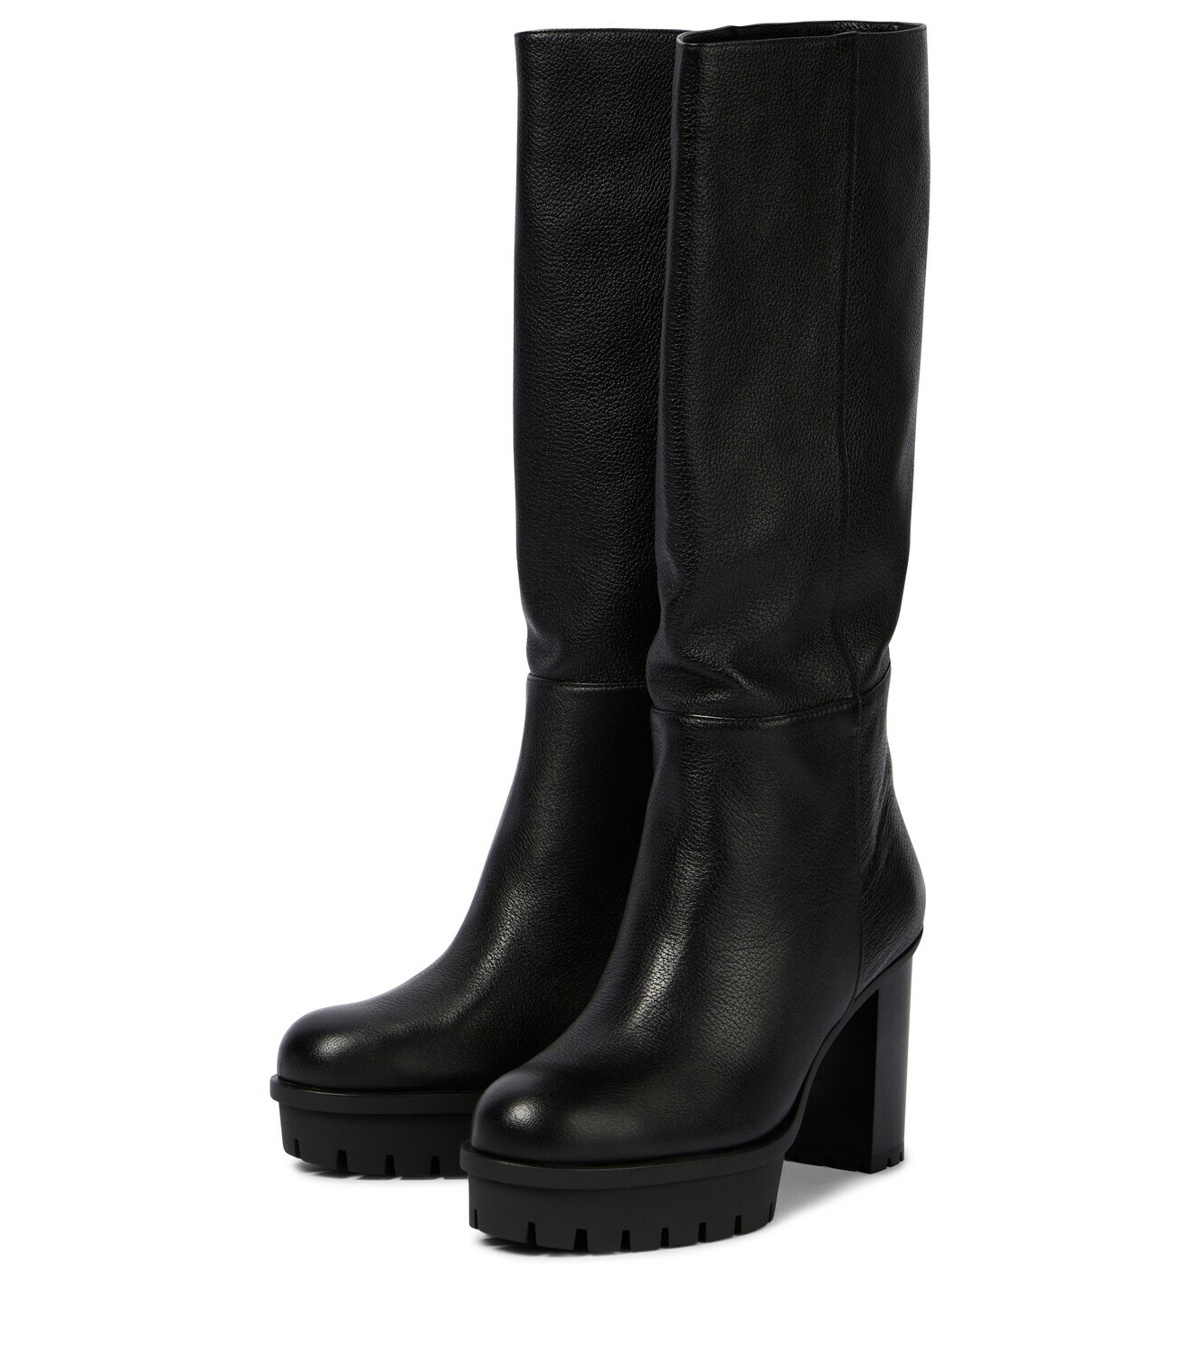 Aquazzura Beau Soleil 60 leather knee-high boots Aquazzura